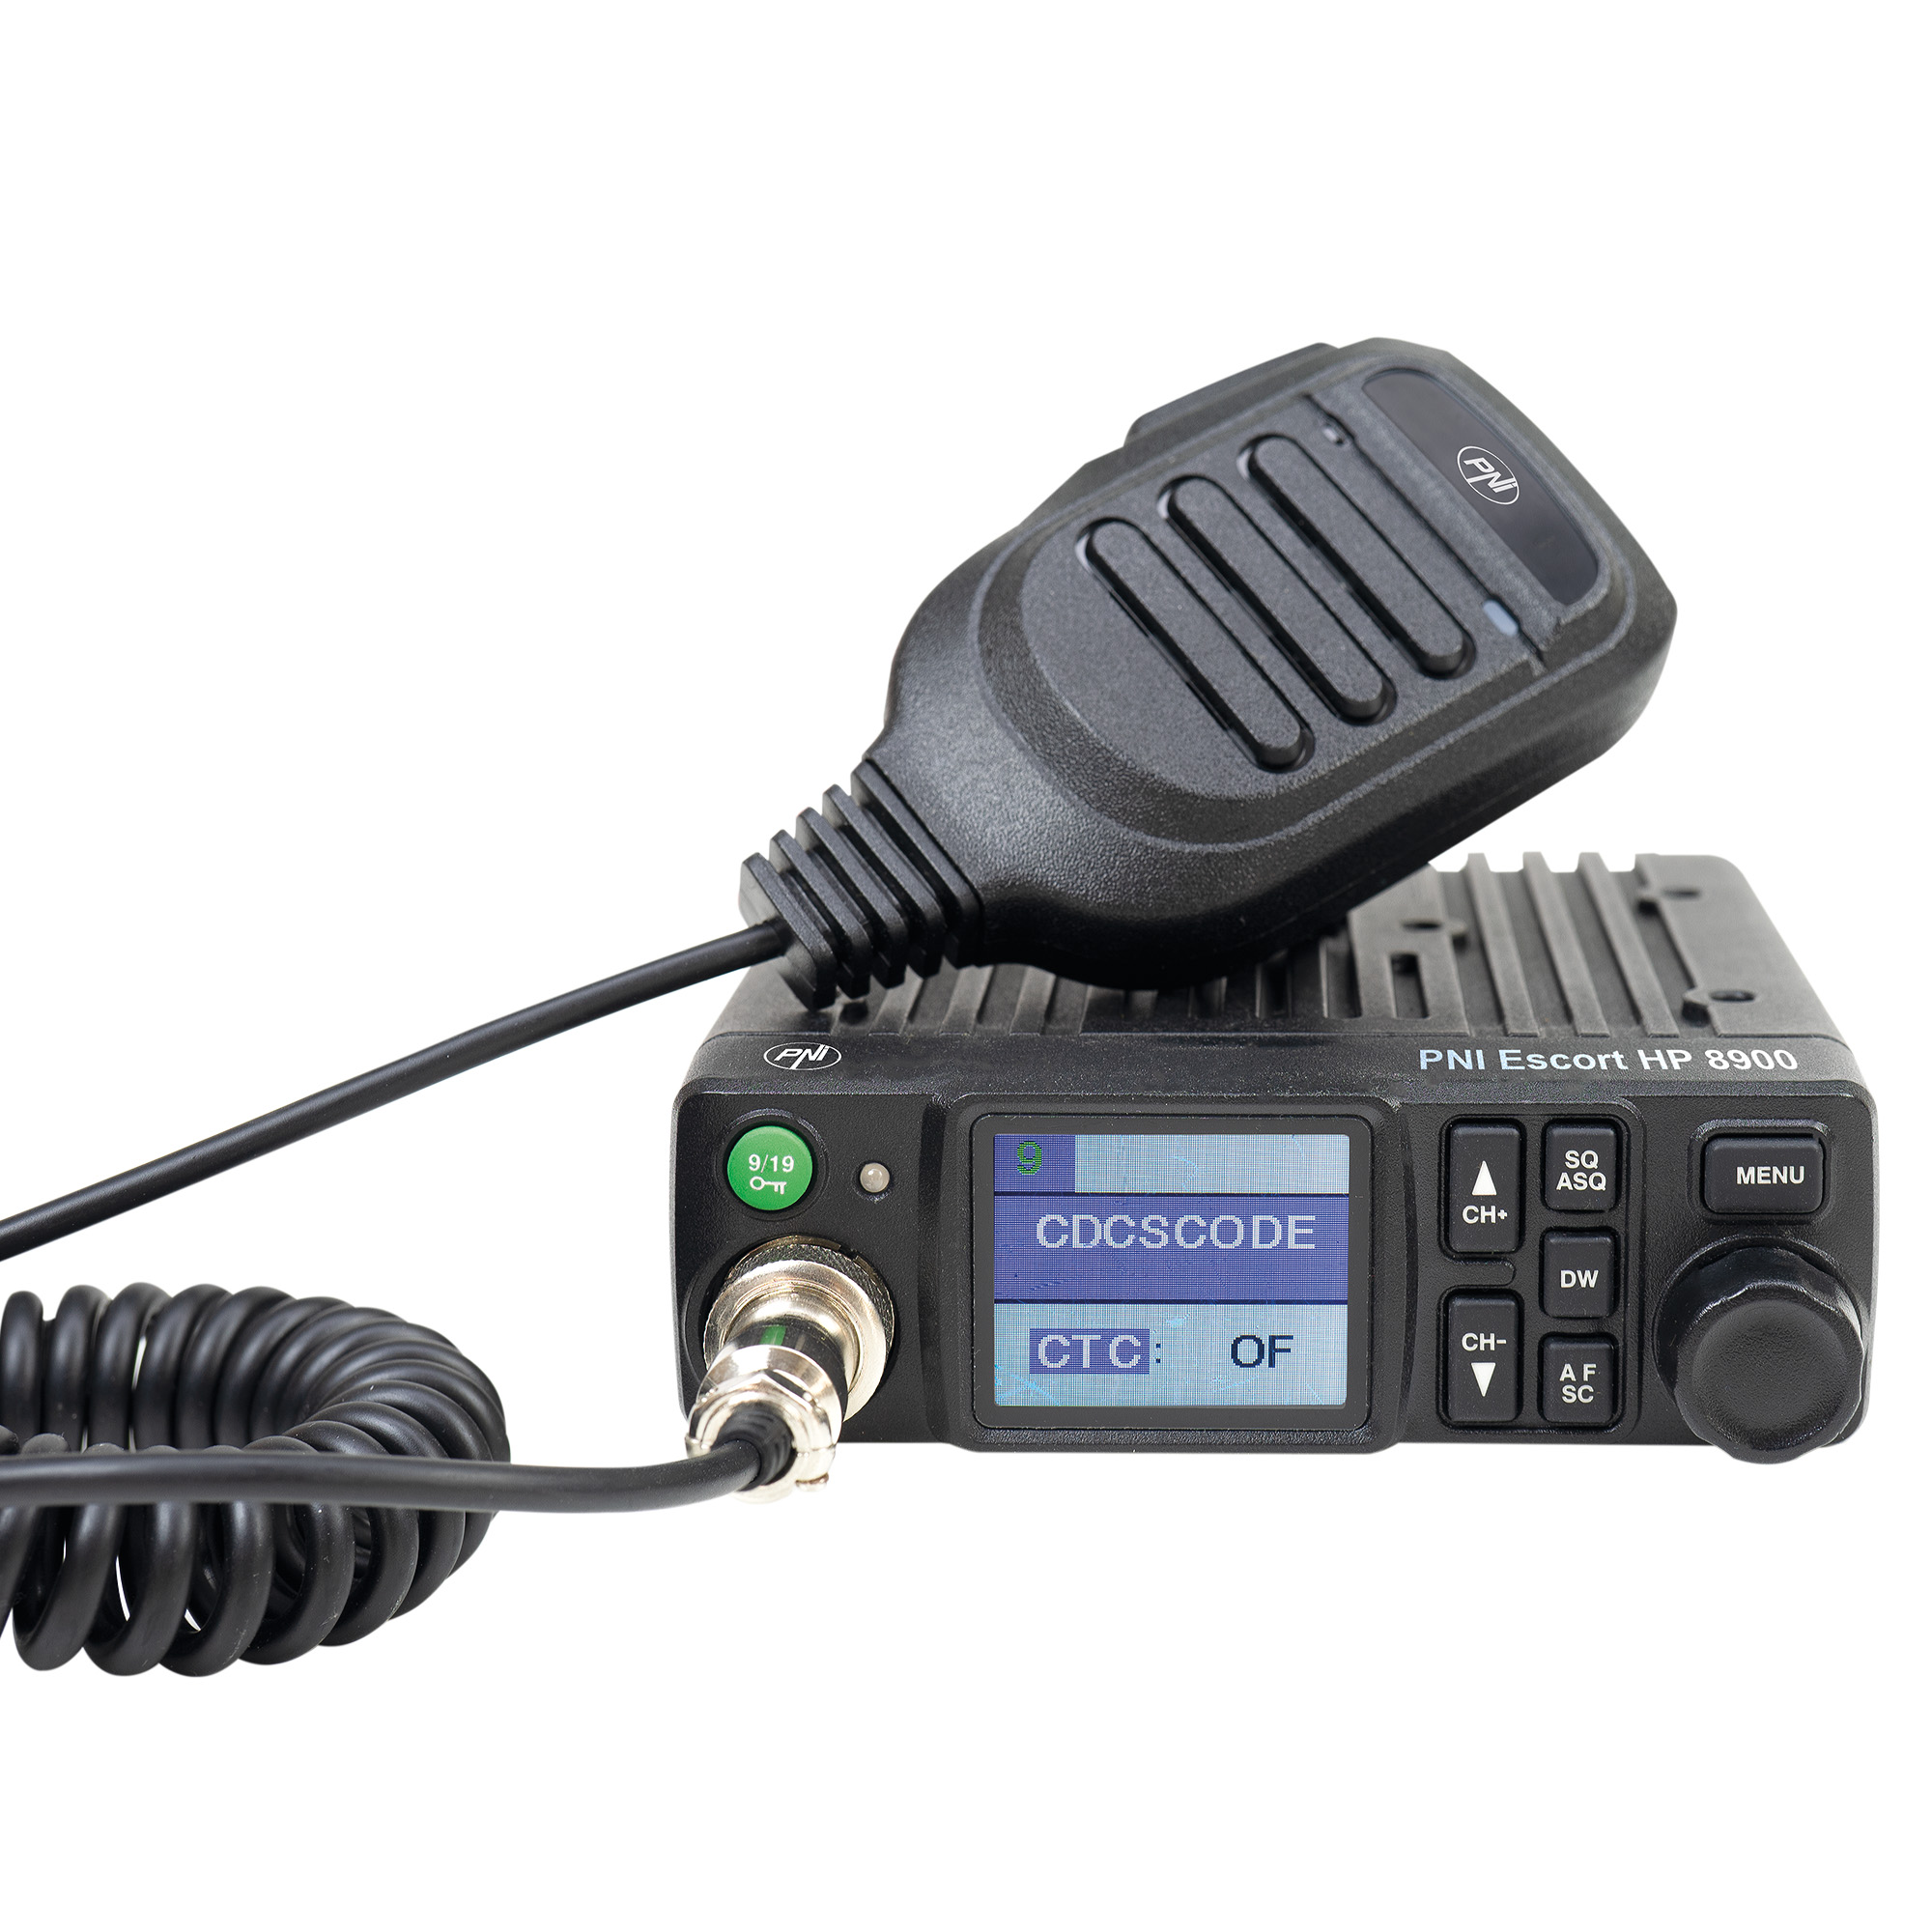 Escort HP Schwarz Radio PNI 8900 Funkgeräte CB